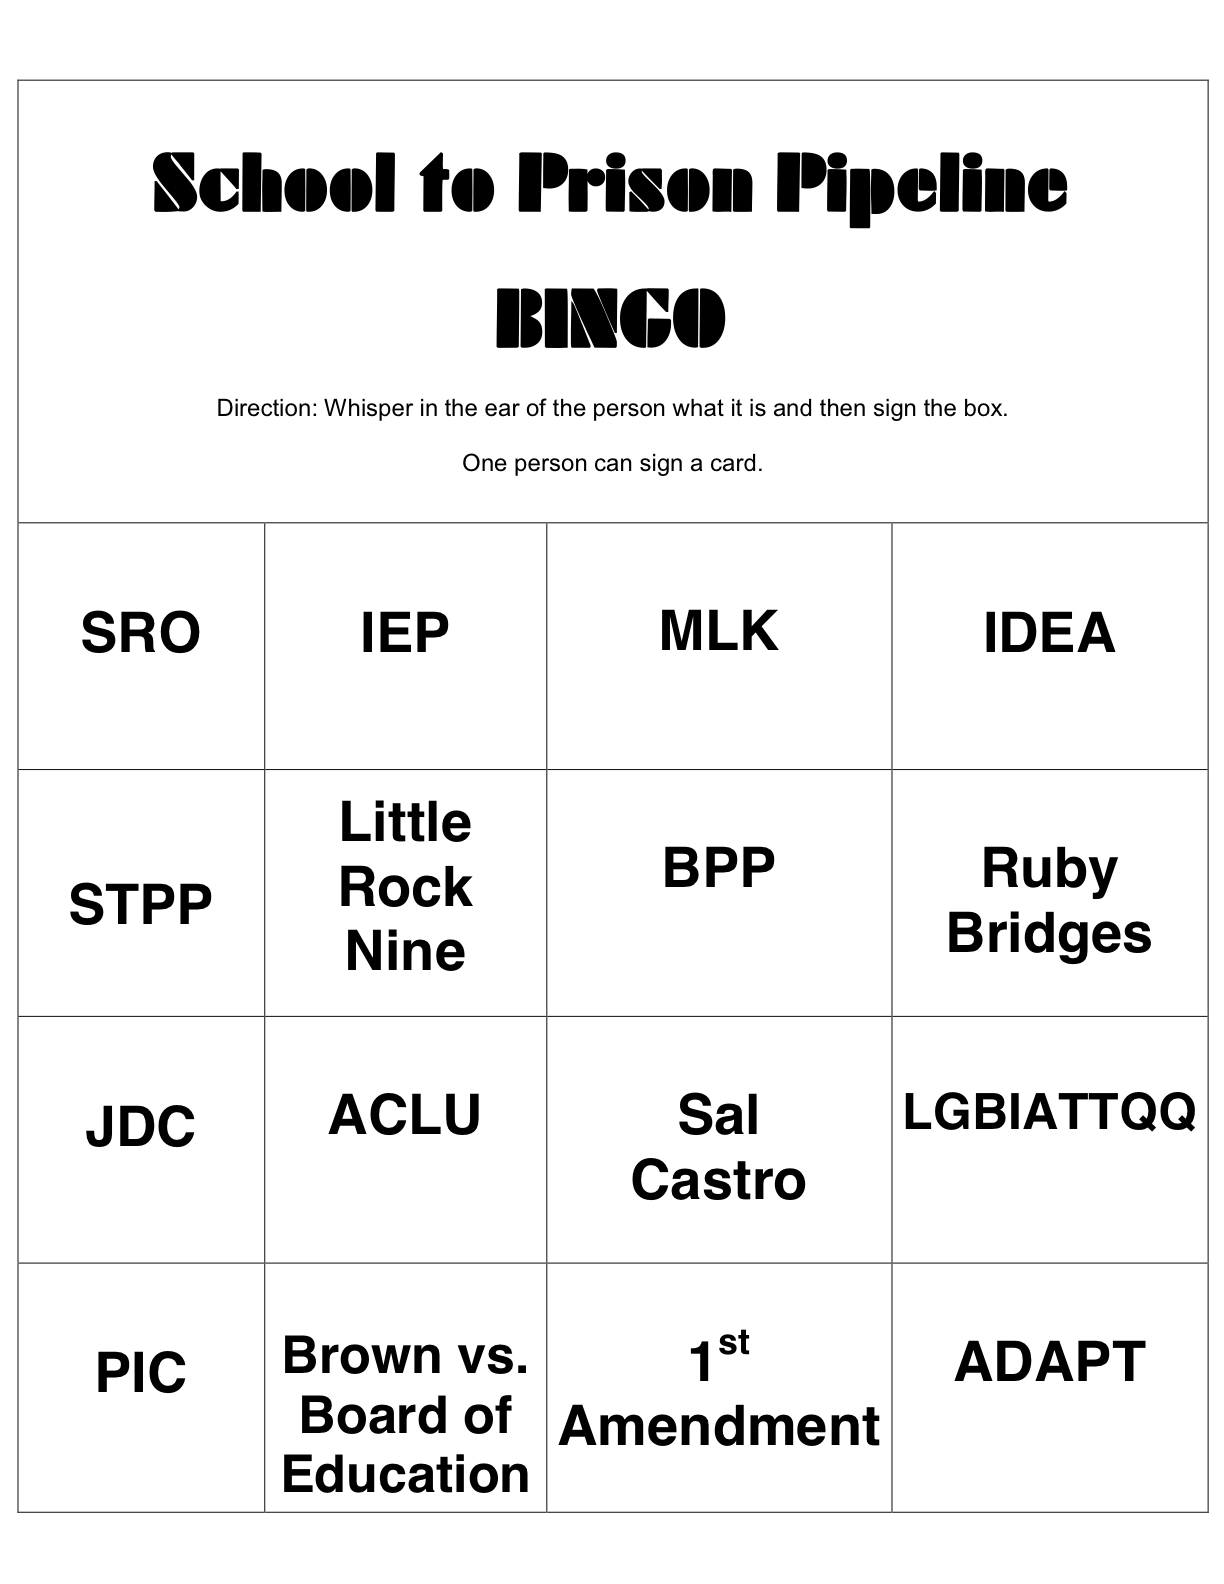 School to Prison Pipeline Bingo